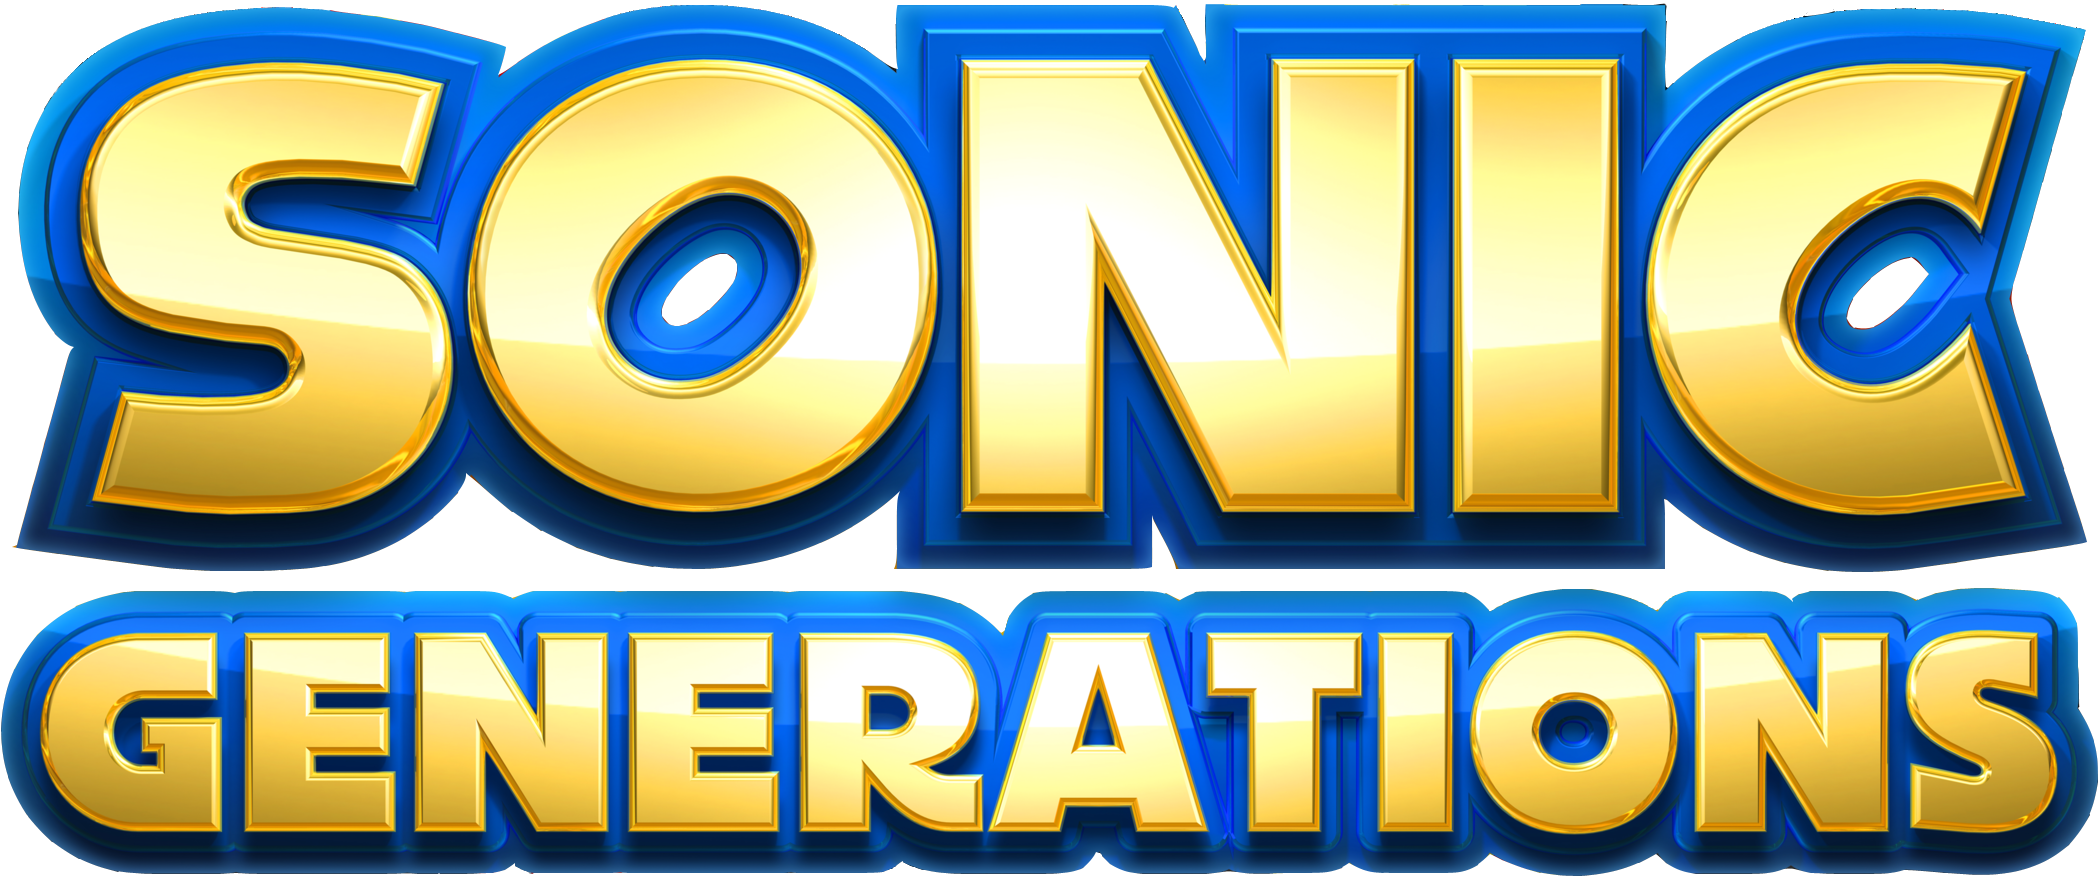 Free Xbox Live Logopedia - Sonic Generations Logo Font (2560x1170)